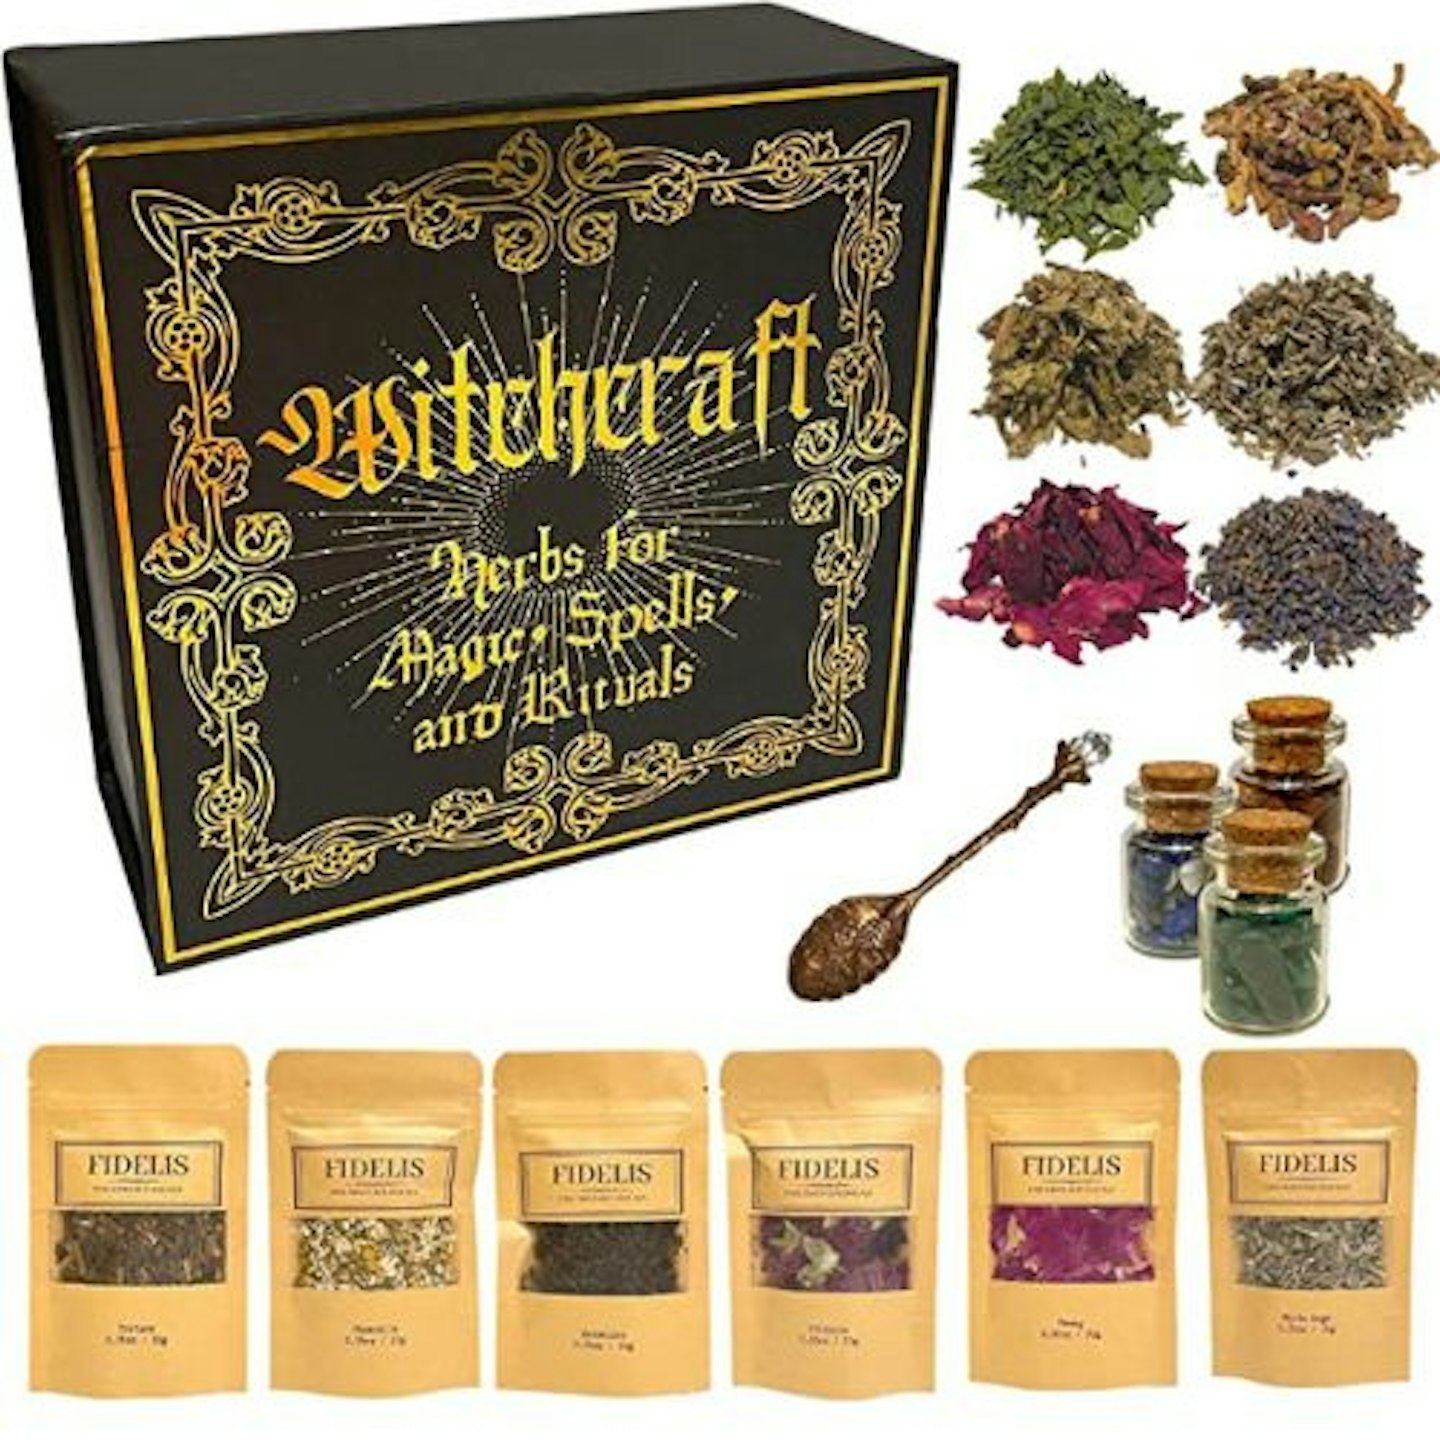 Witchcraft Supplies and Herbs for Spells 25 Premium Fine Dried Botanicals